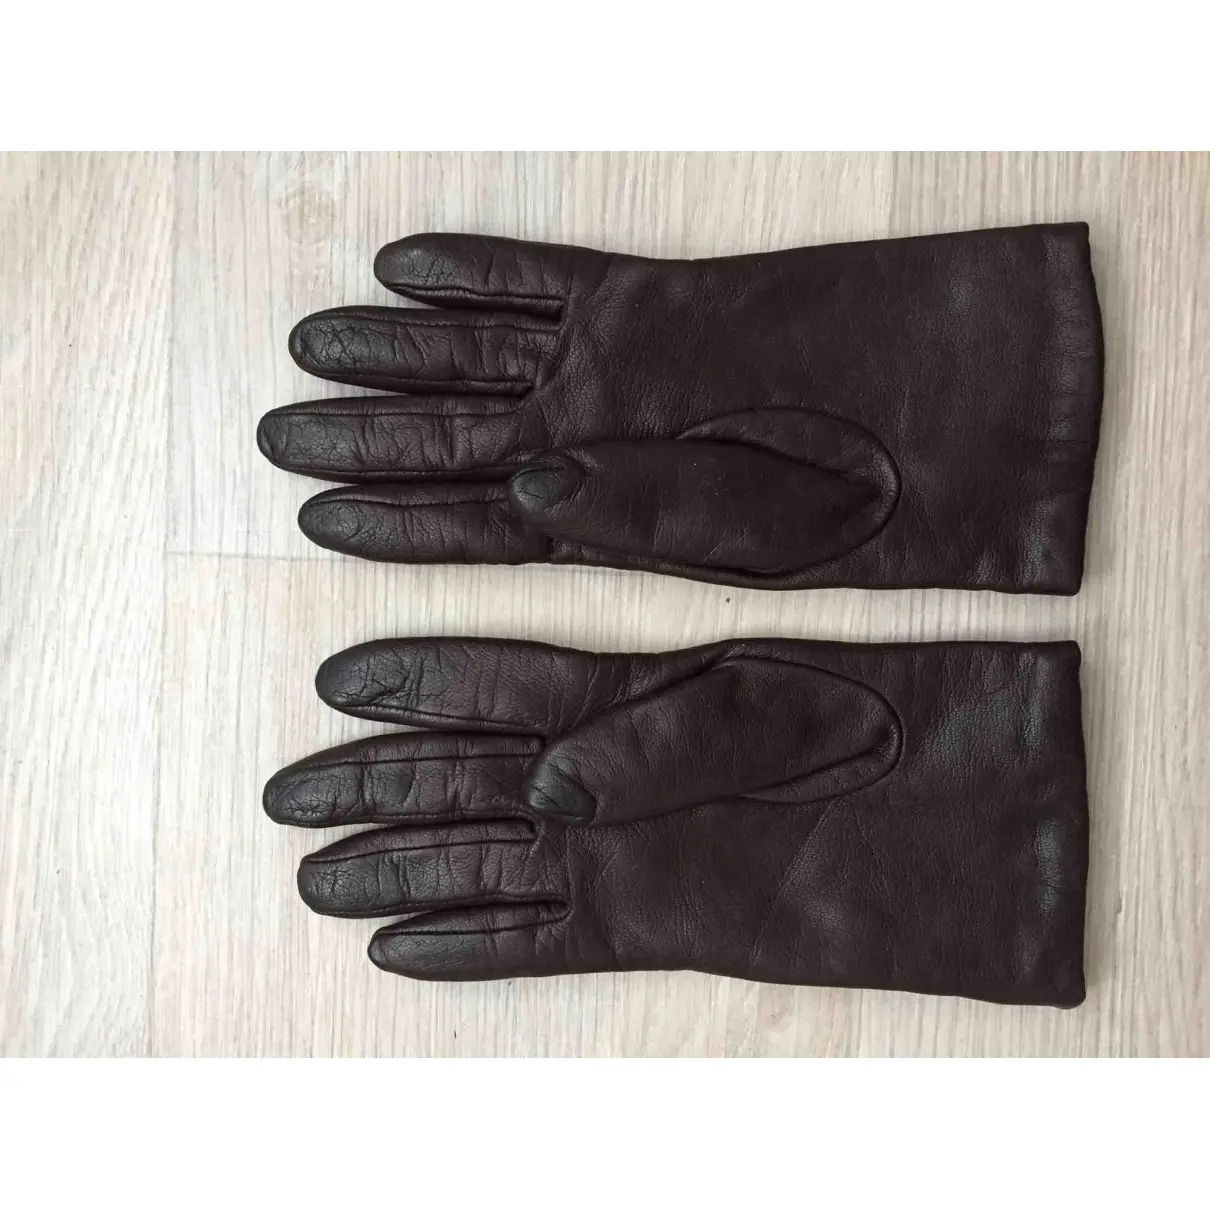 Emporio Armani Leather gloves for sale